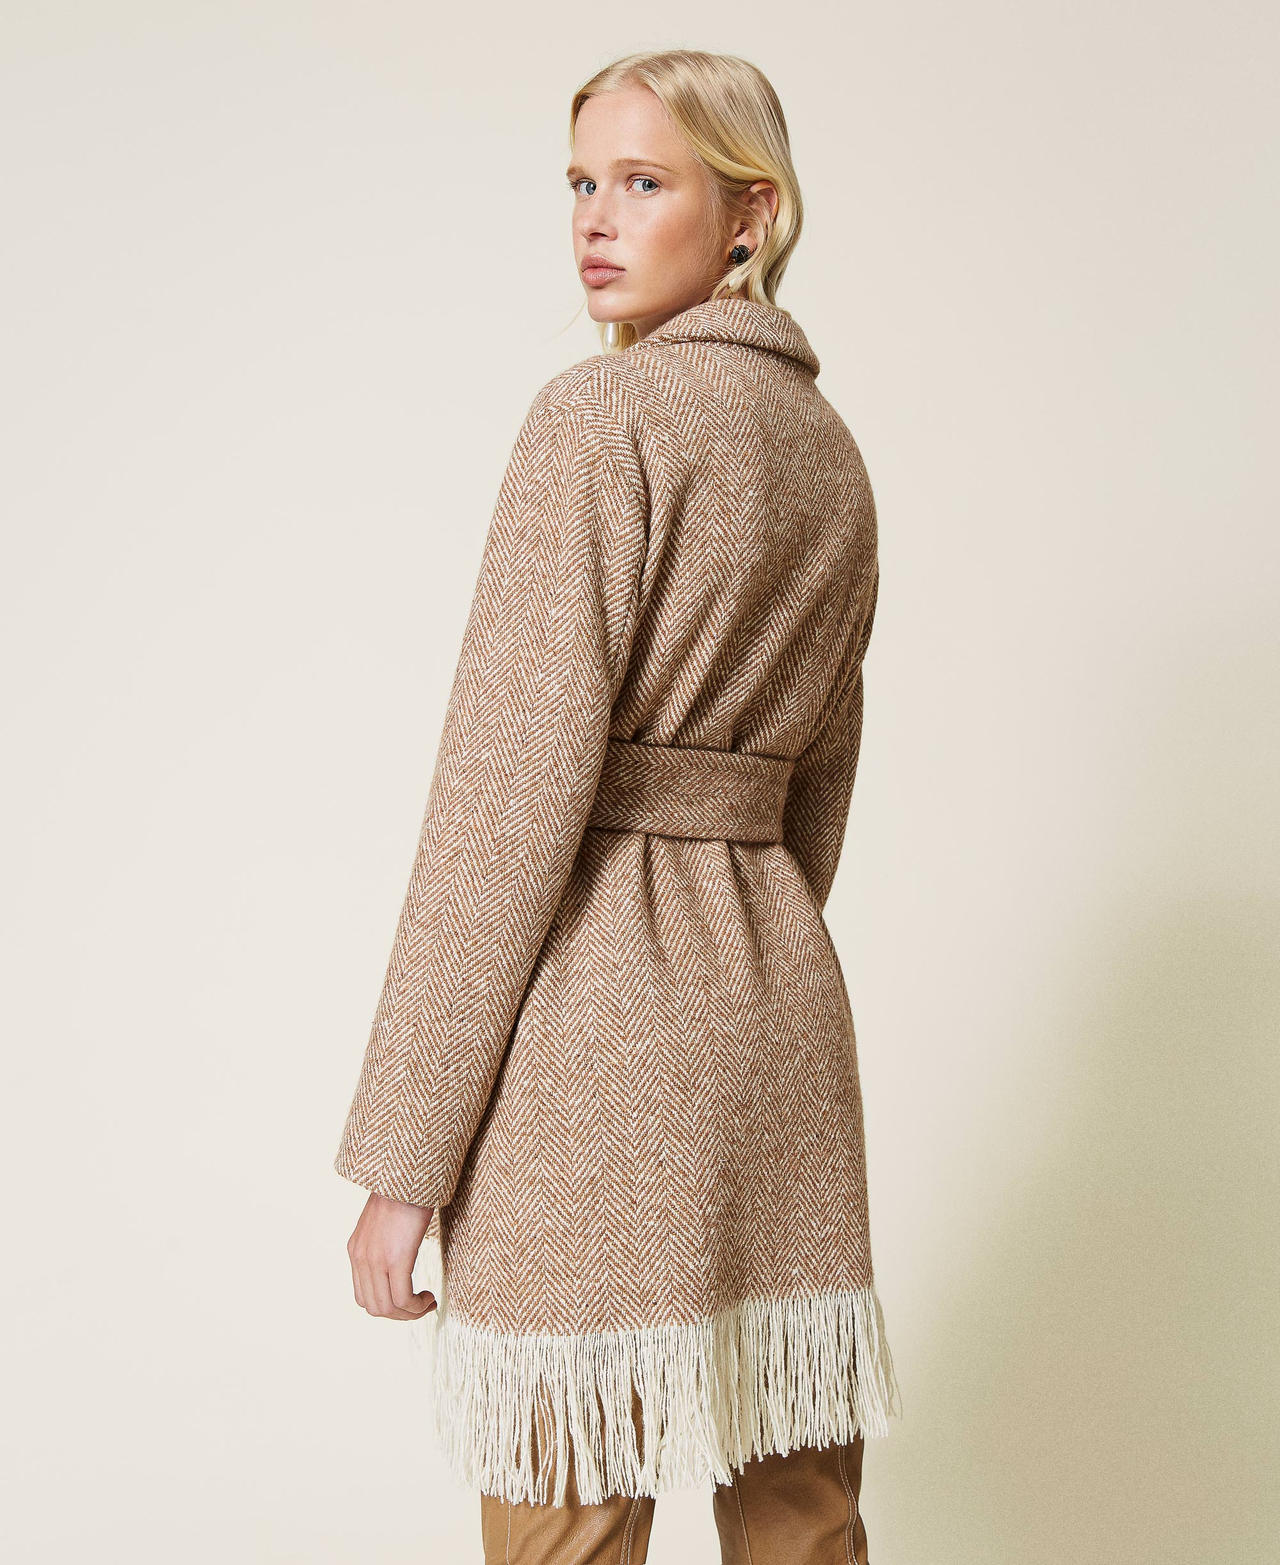 Chevron wool cloth coat with fringes at the hem "Rum” Brown / “Snow” White Herringbone Woman 212TP2611-02